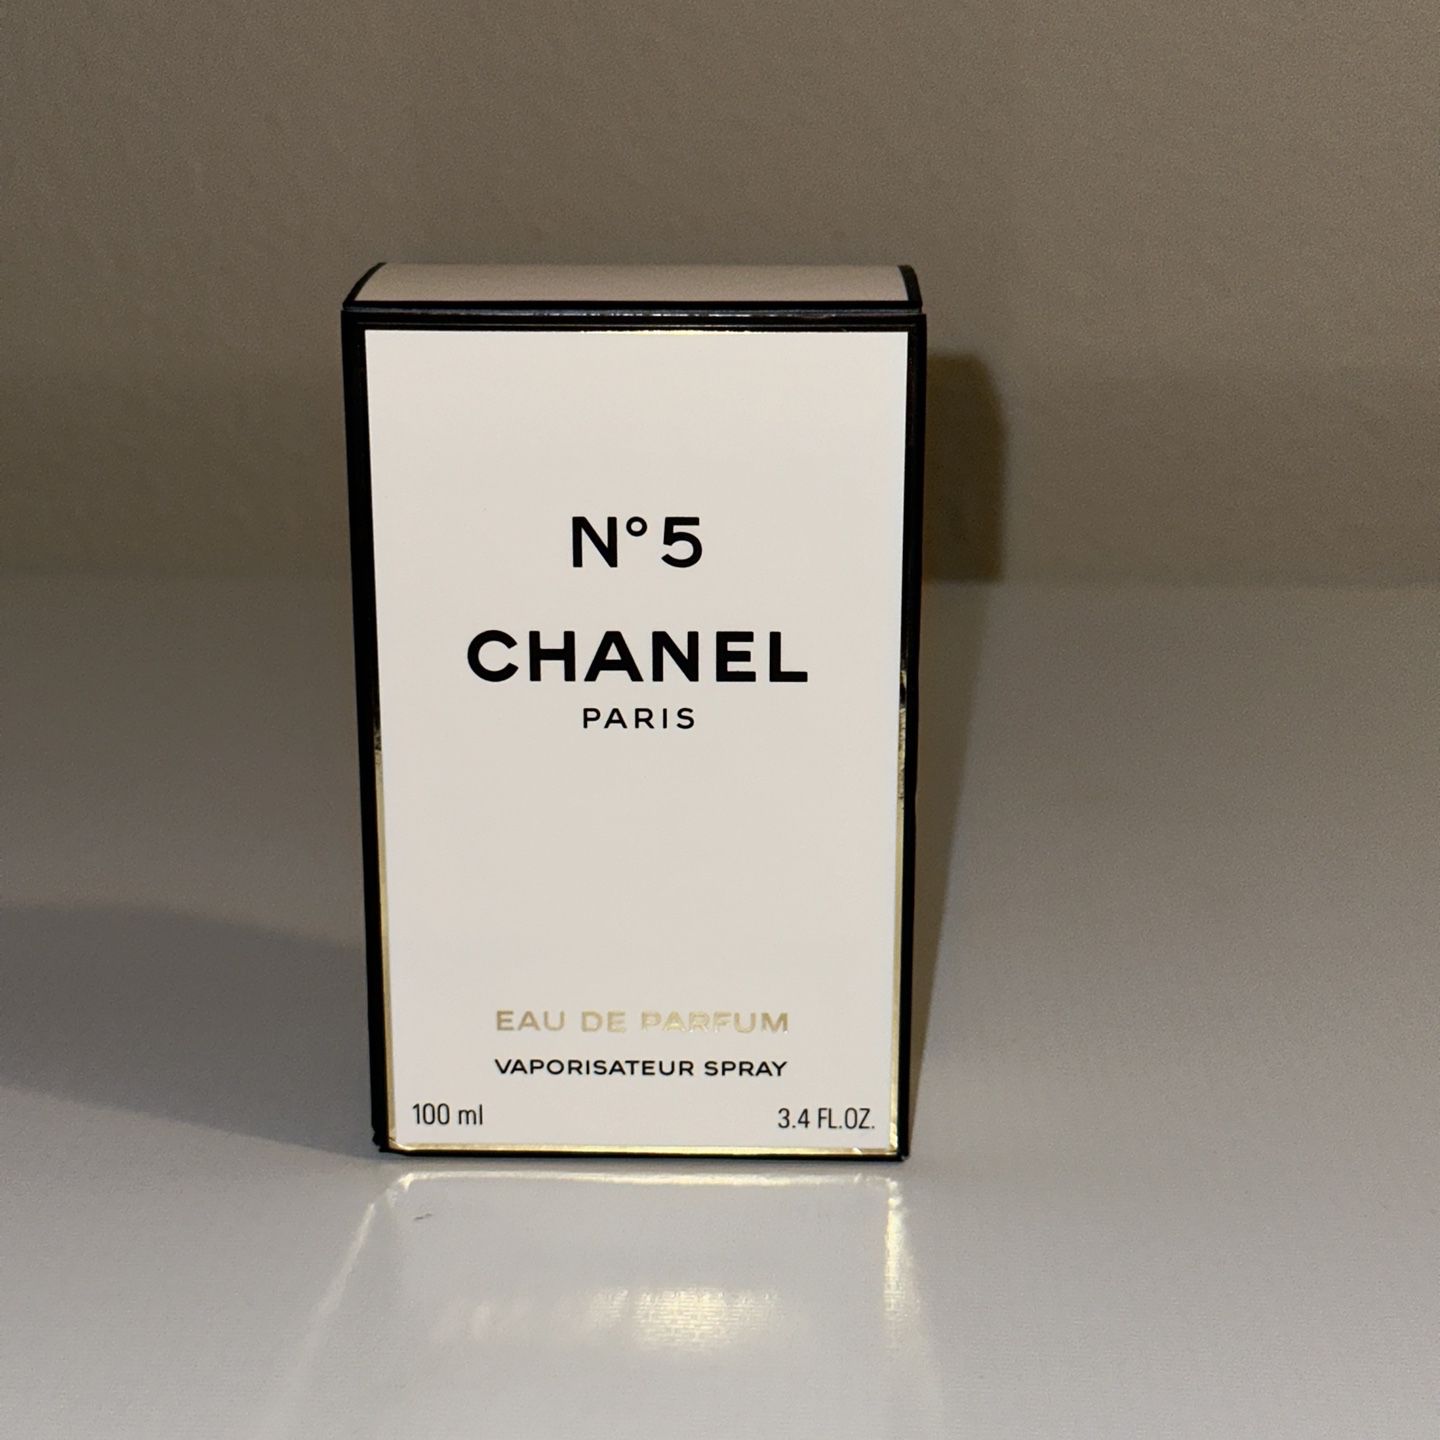 Chanel No 5 Edp 3.4 Fl Oz For Women for Sale in Renton, WA - OfferUp